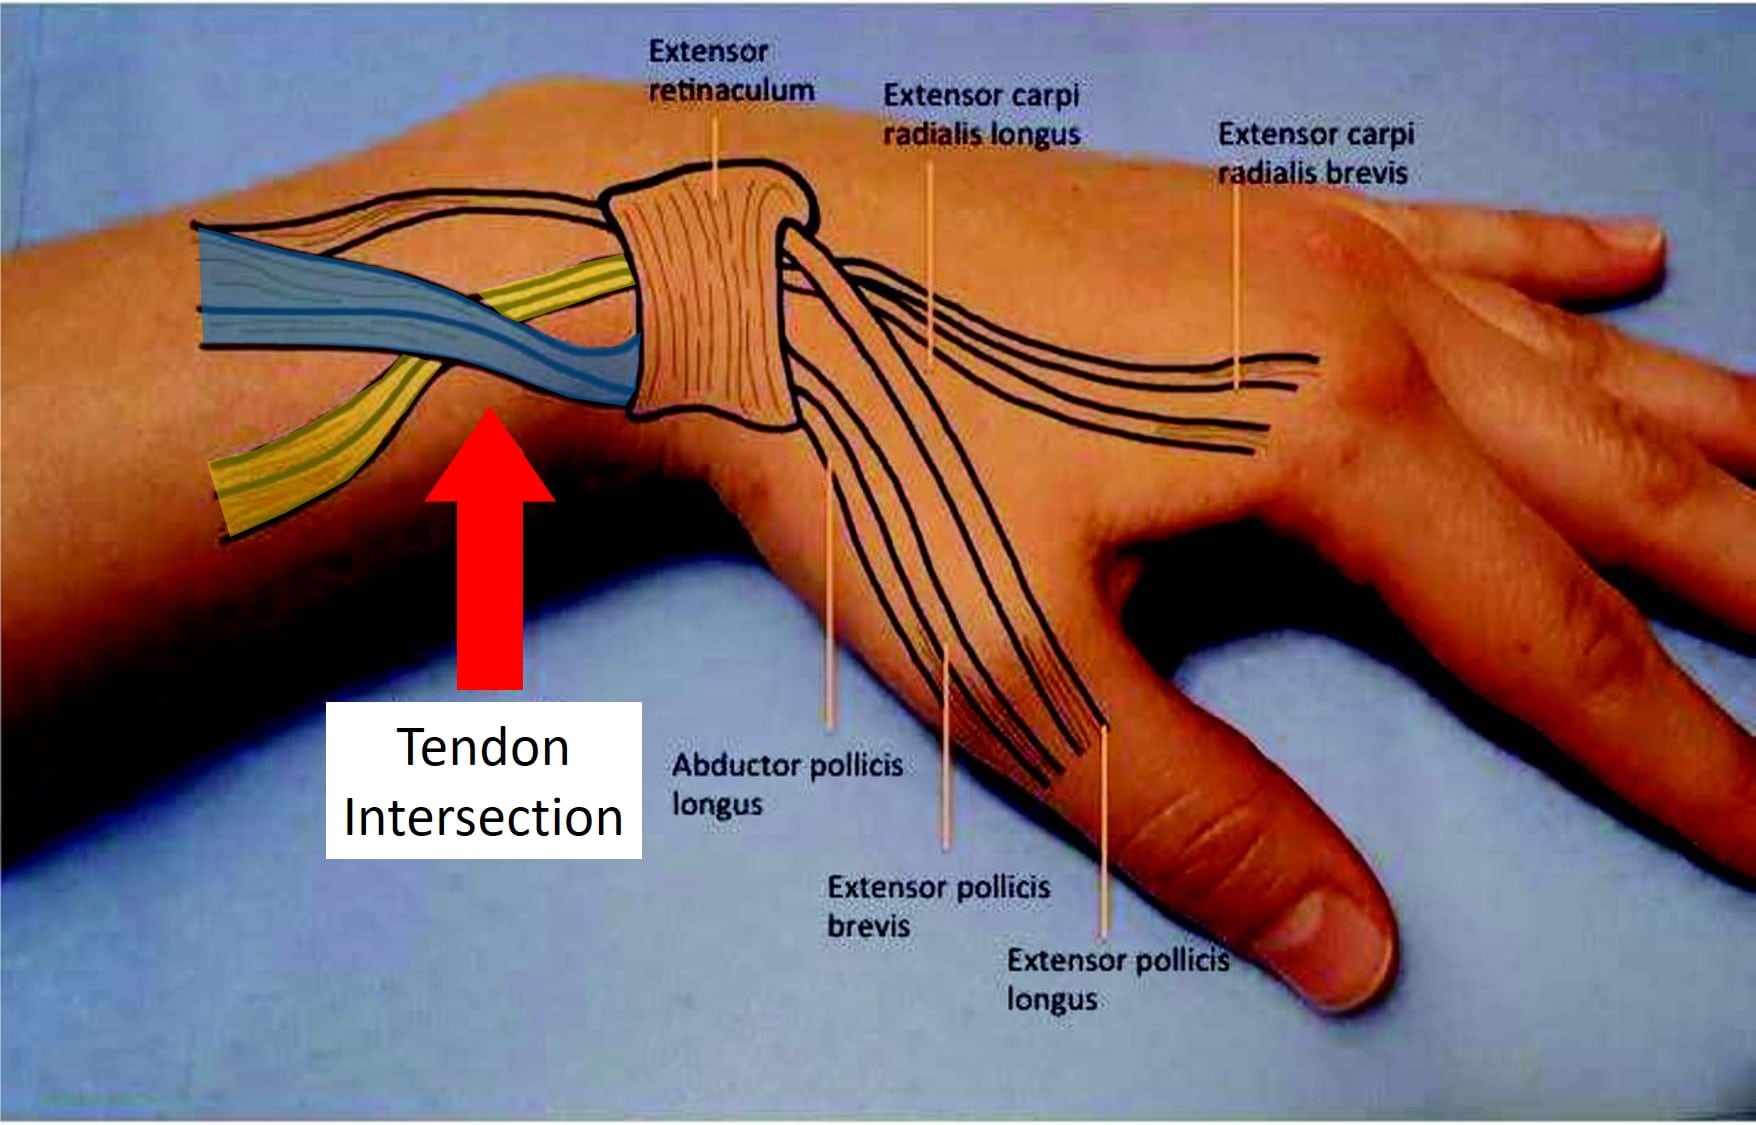 extensor tendonitis wrist